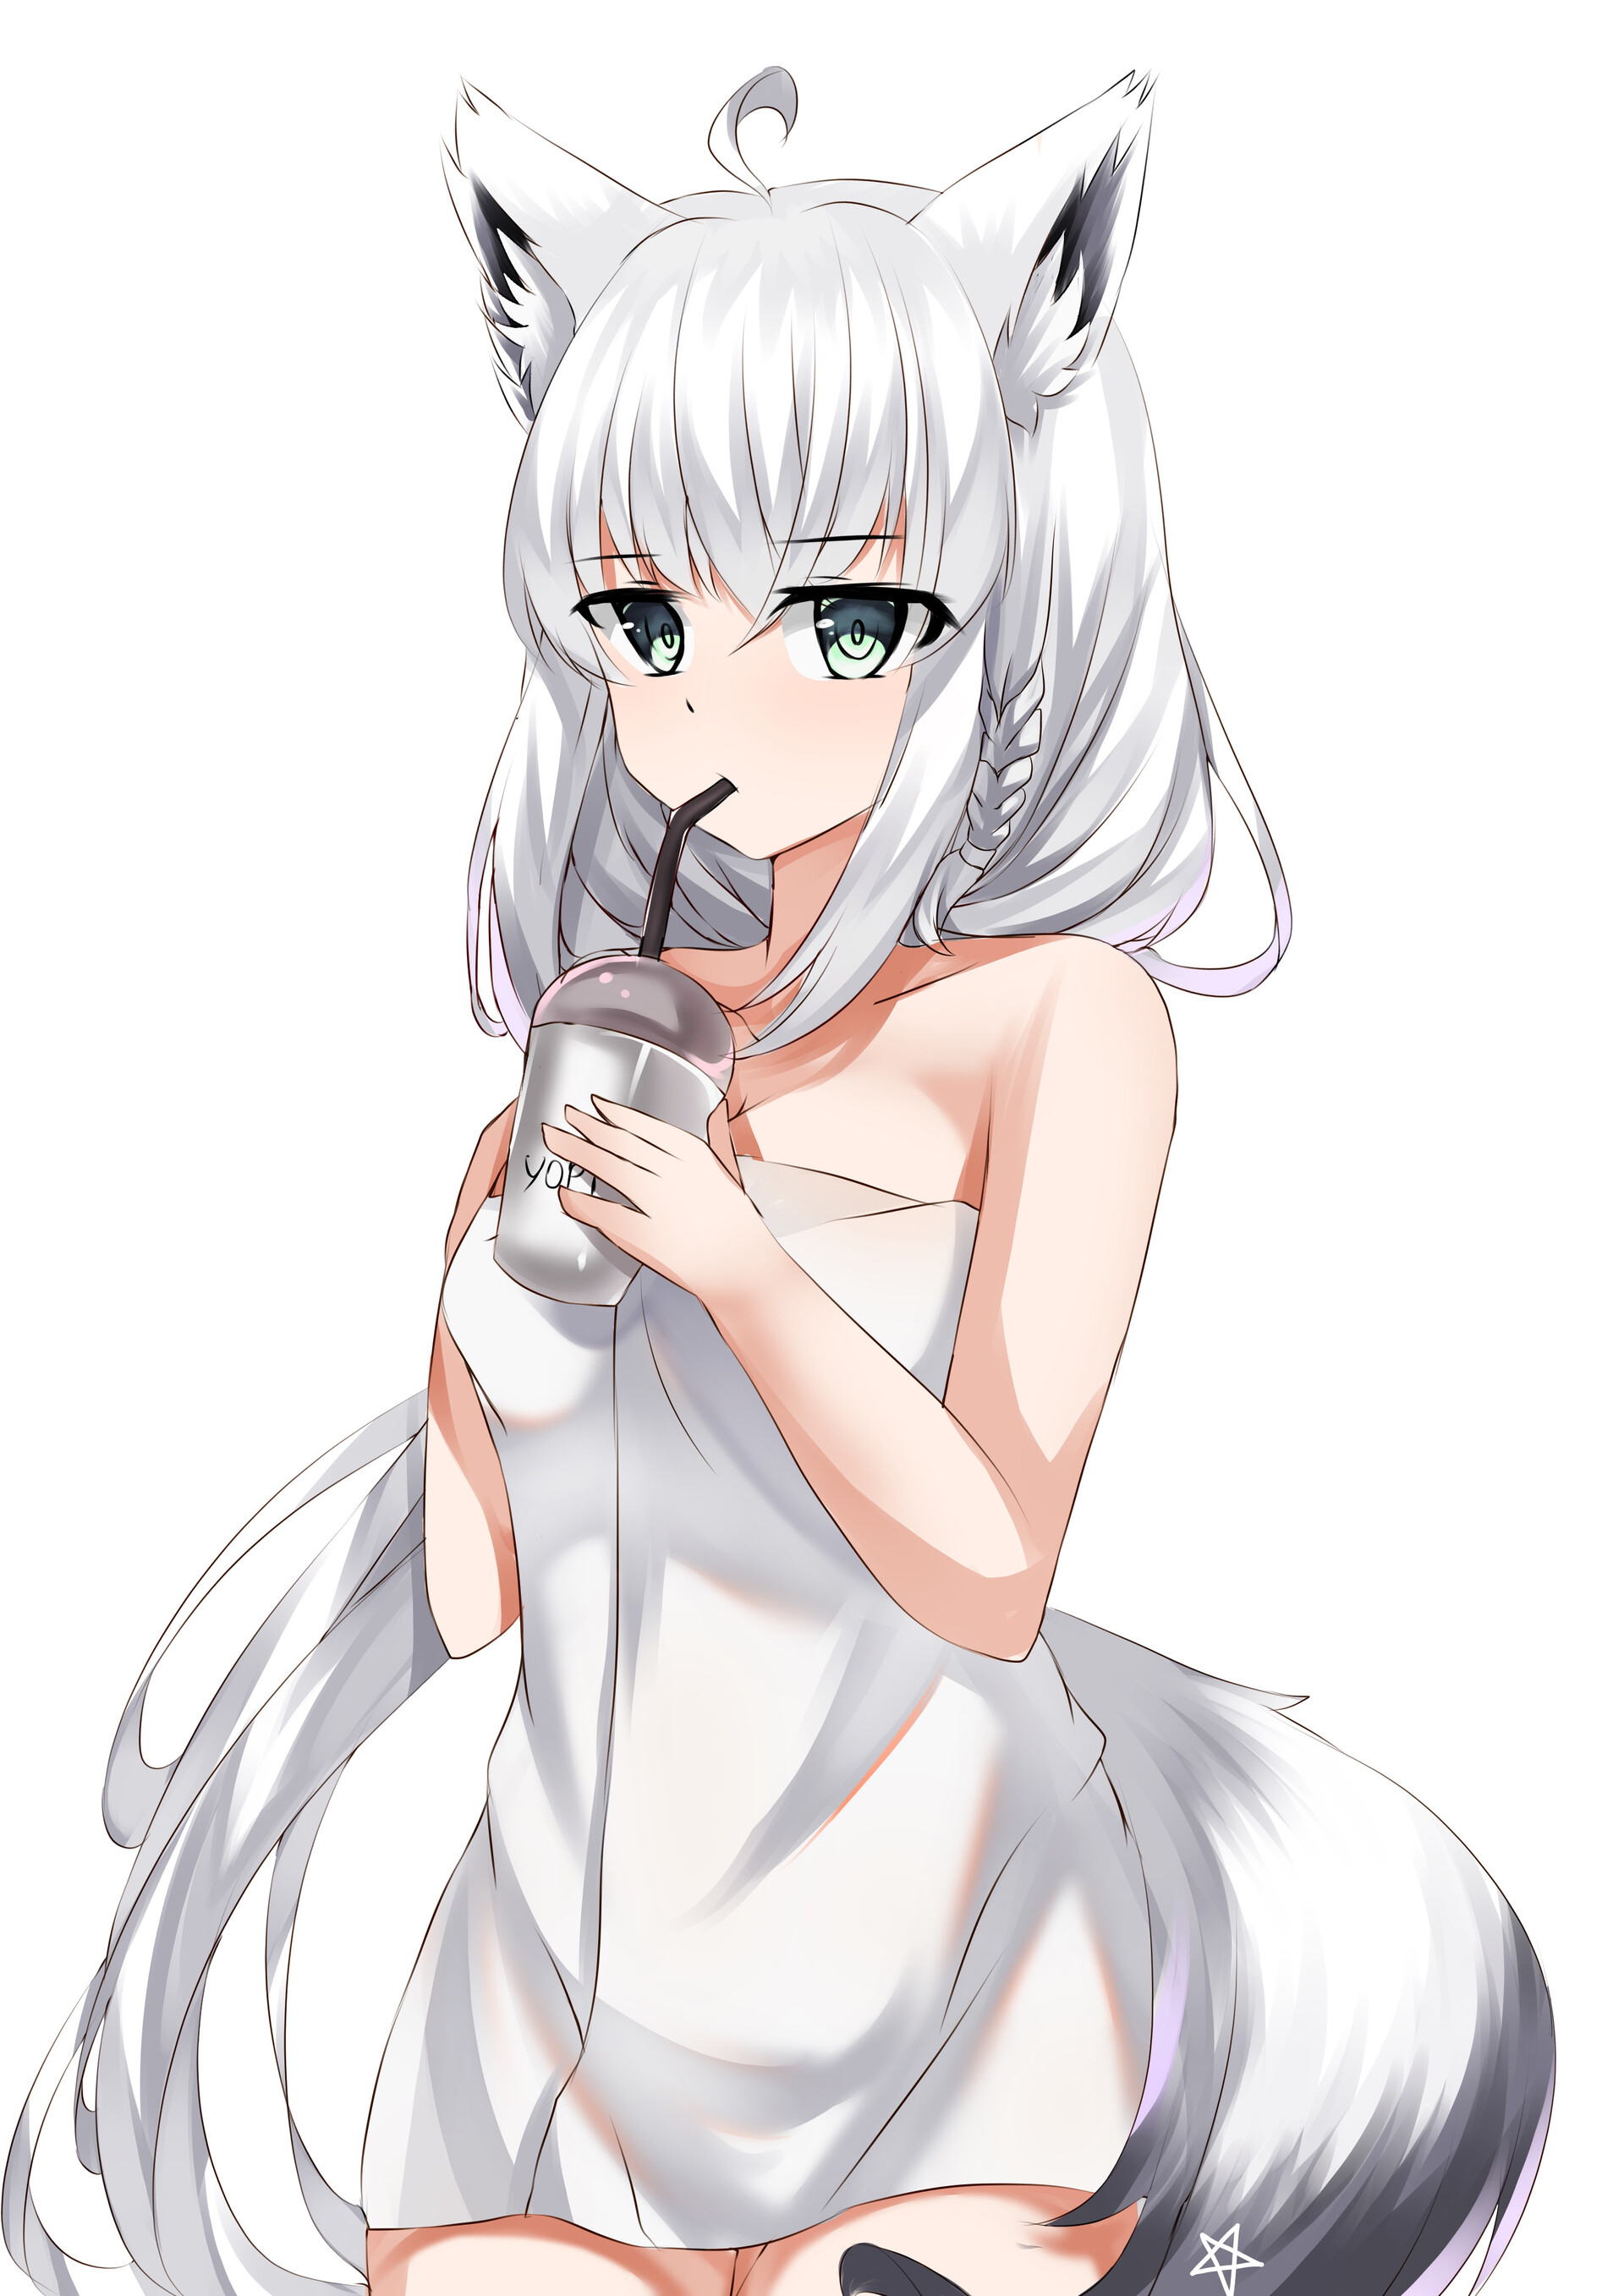 ArtStation - white fox girl character commissions